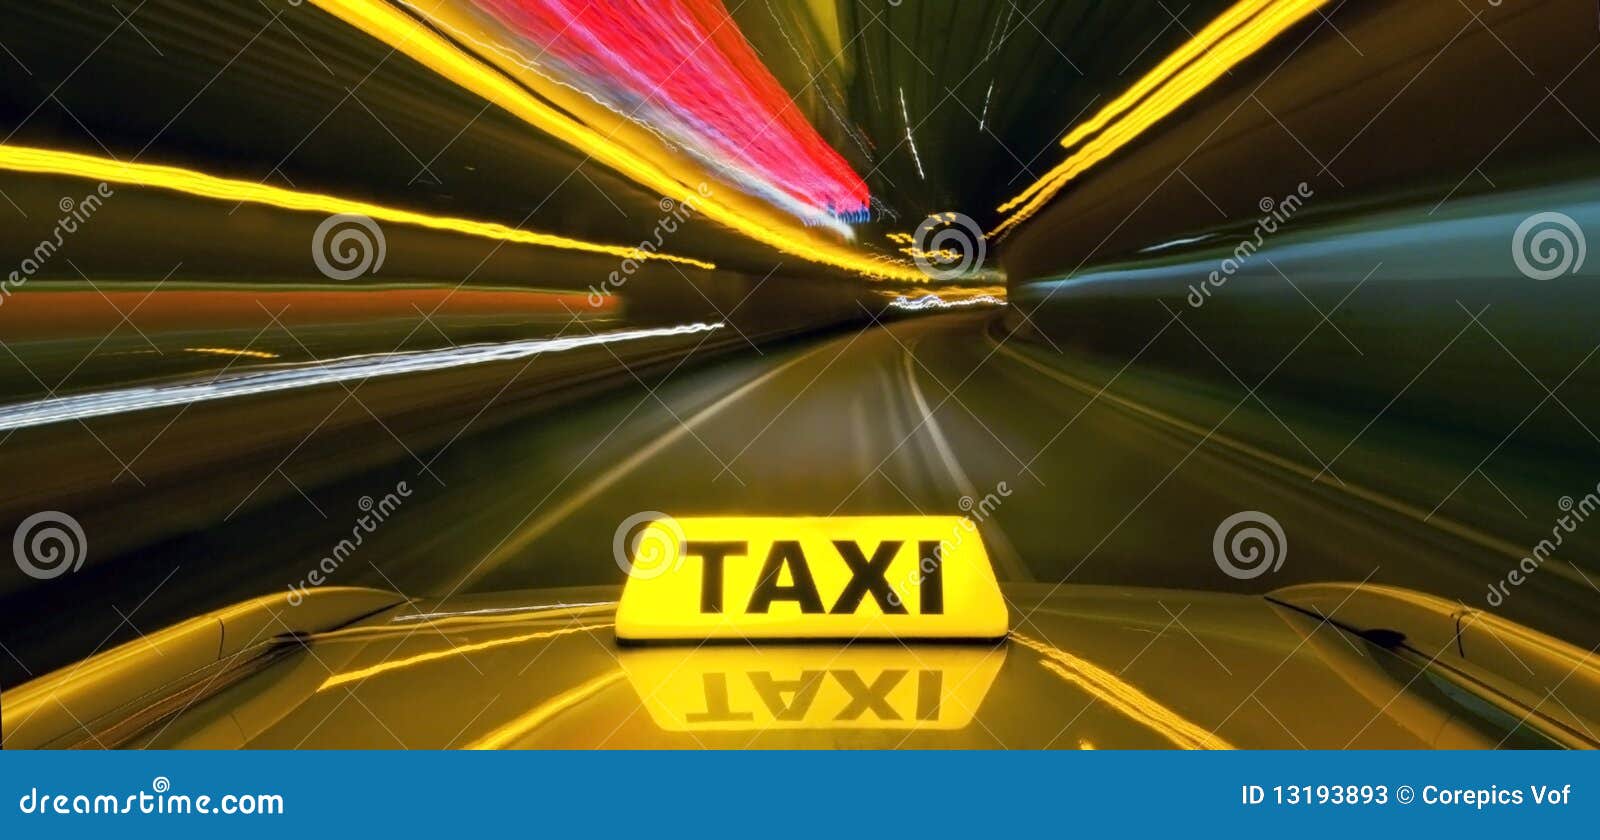 taxi at warp speed